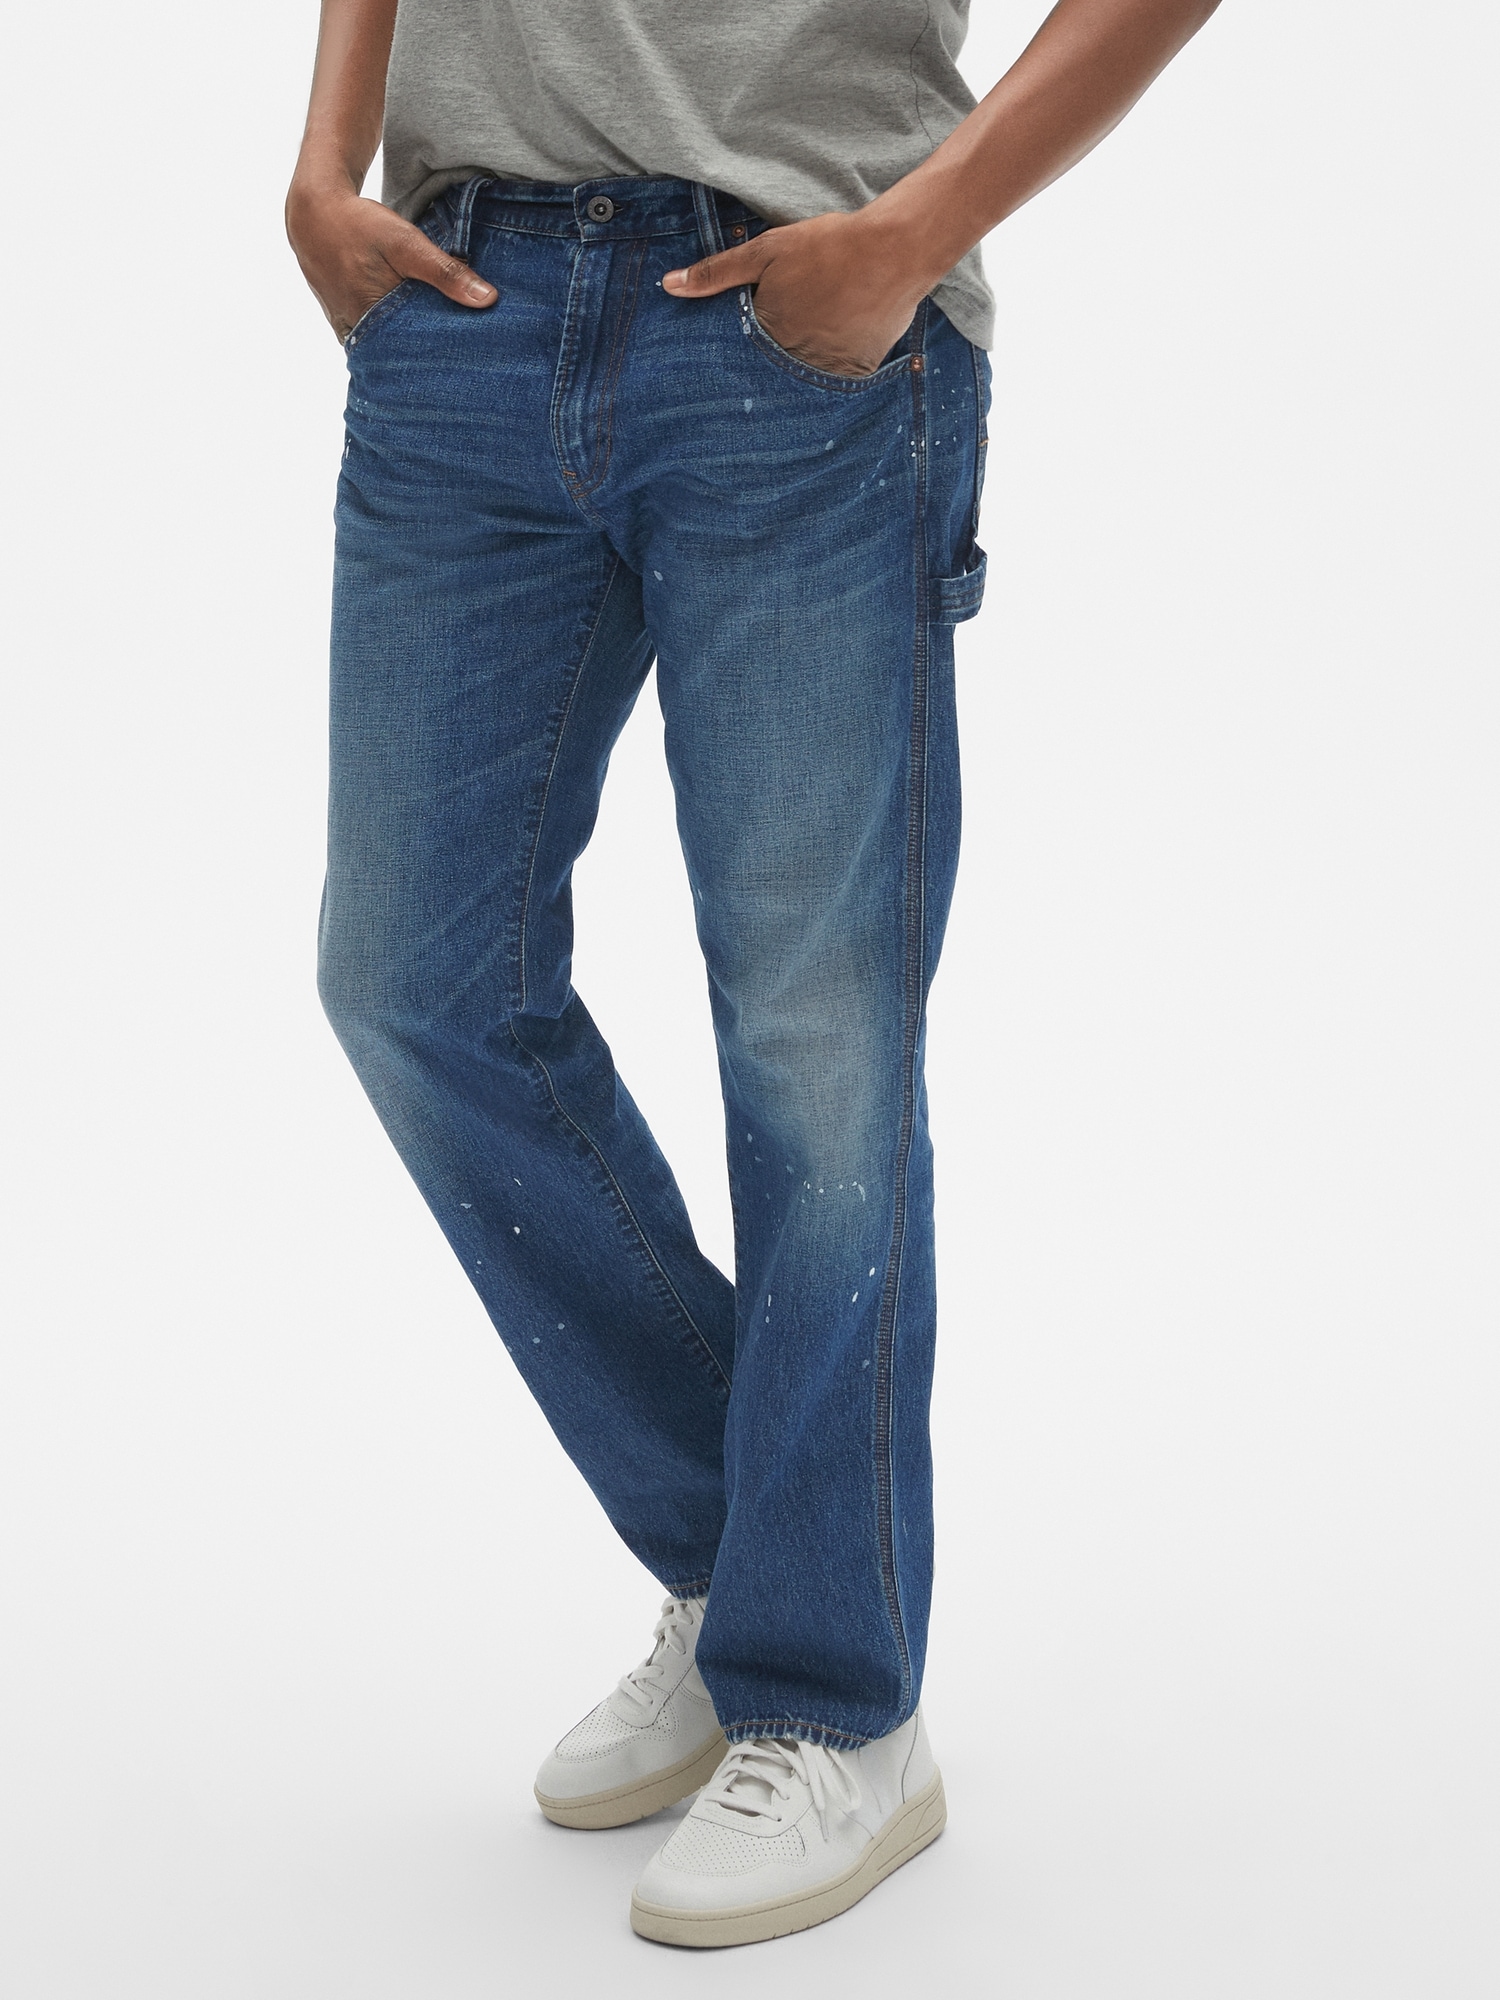 gap jeans discount